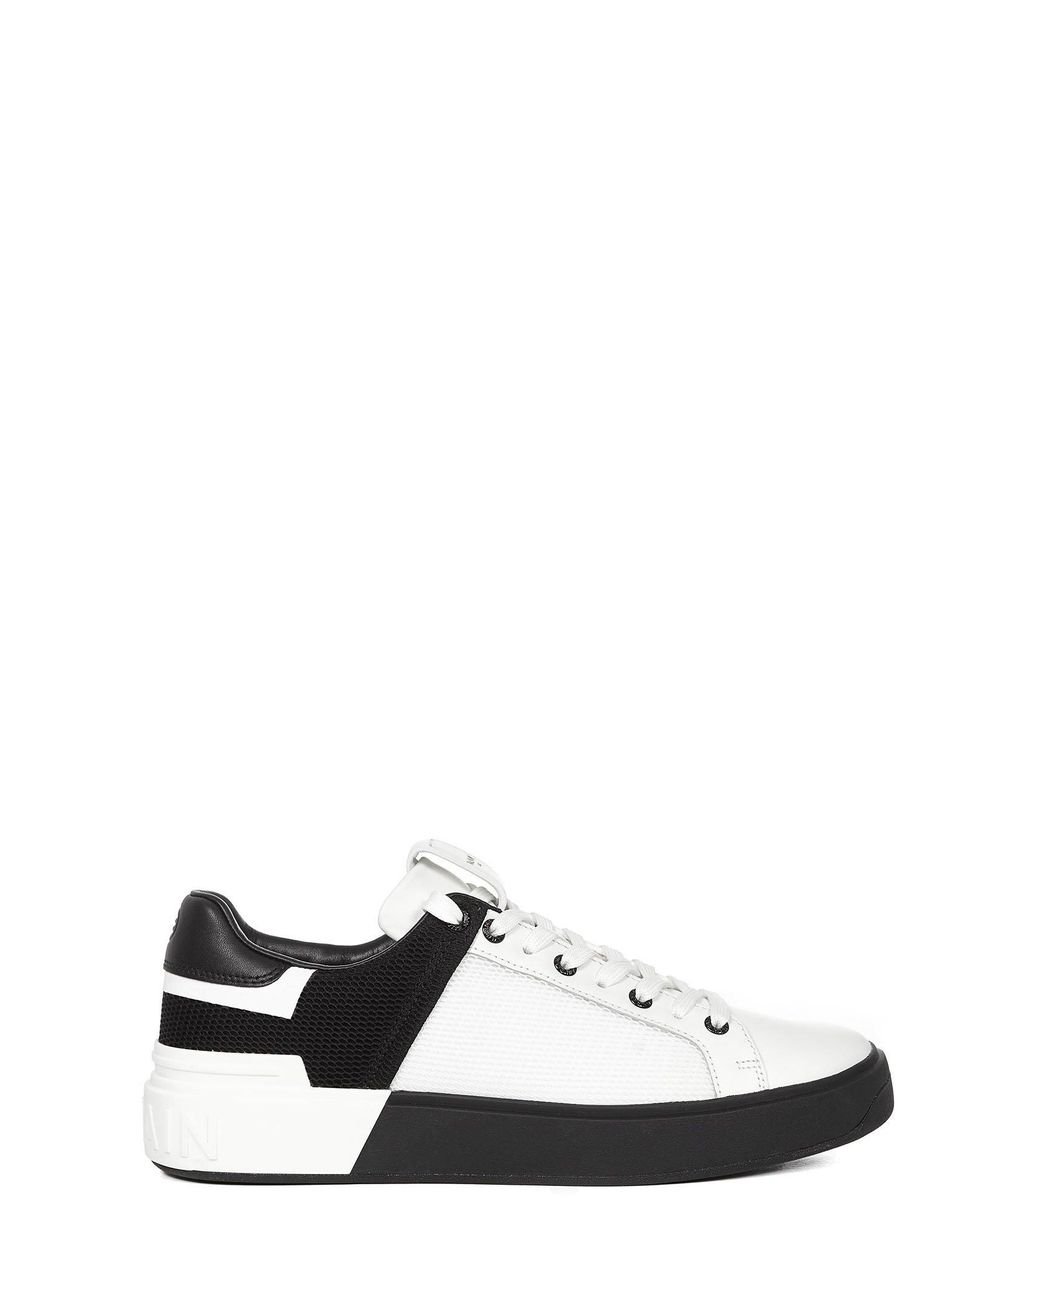 Balmain Leather Sneakers White for Men - Lyst